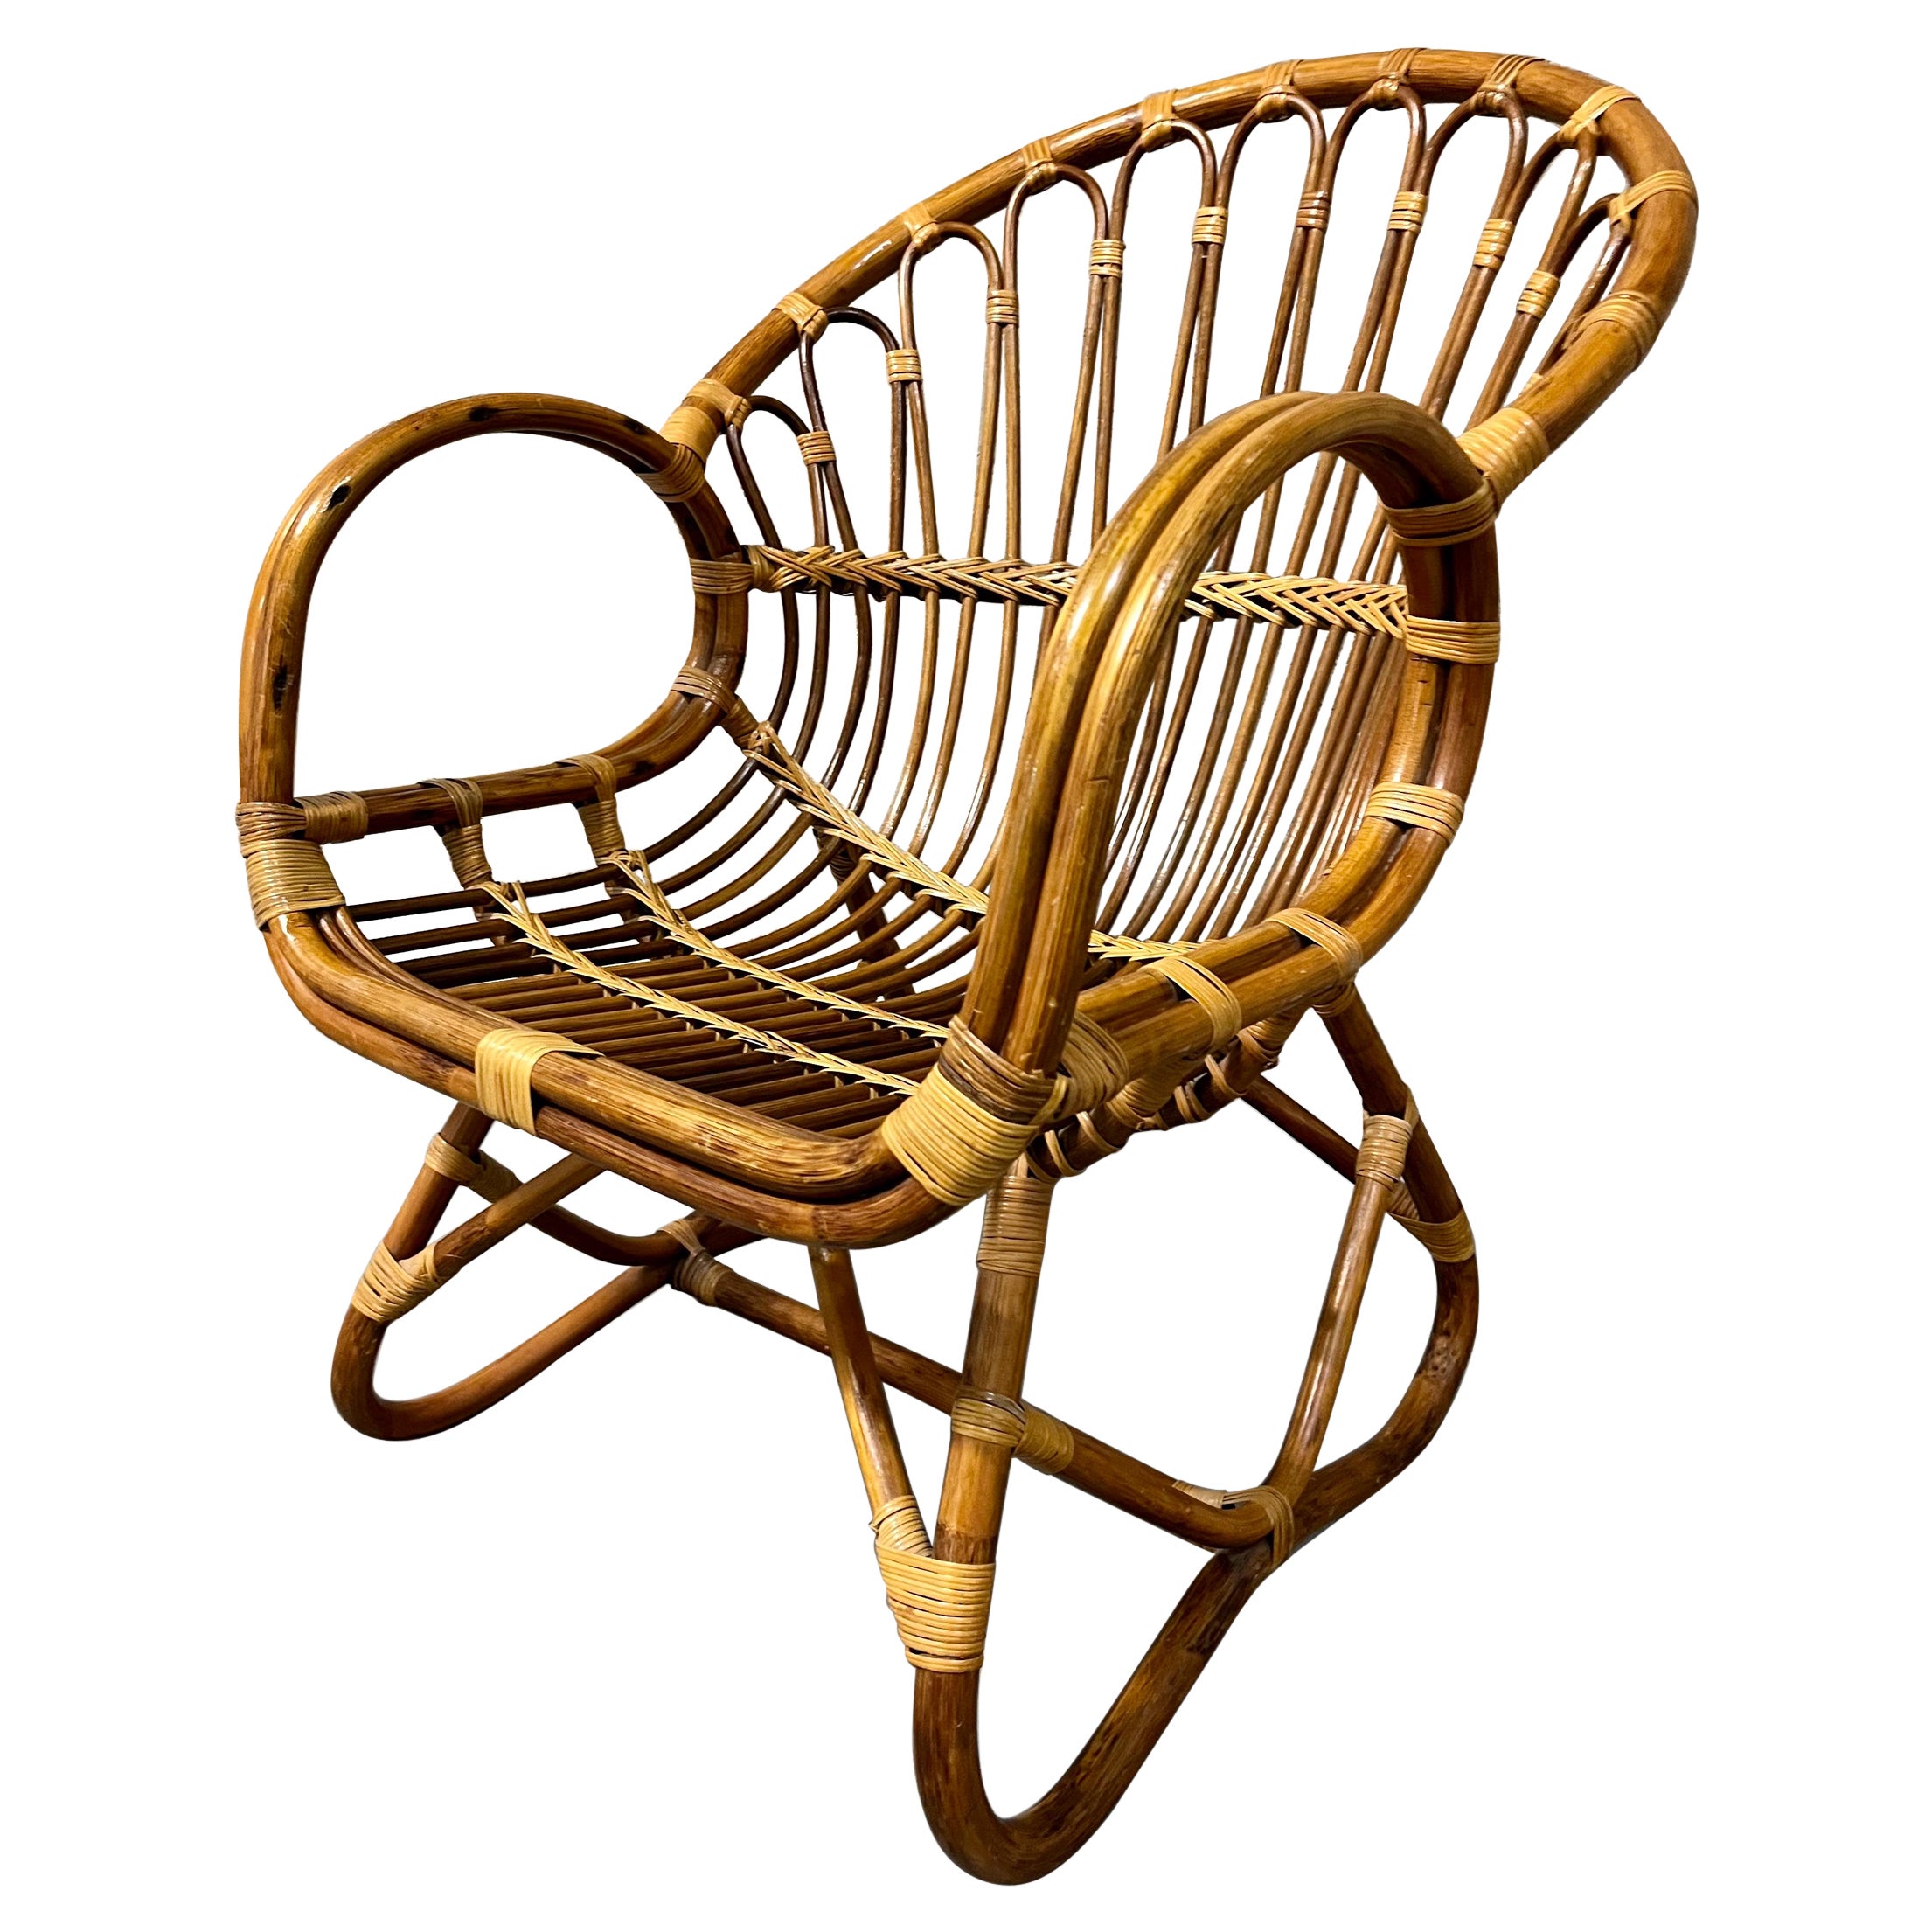 Mid Century Modern Rattan Lounge Chair in the Franco Albini's Style. Circa 1970s